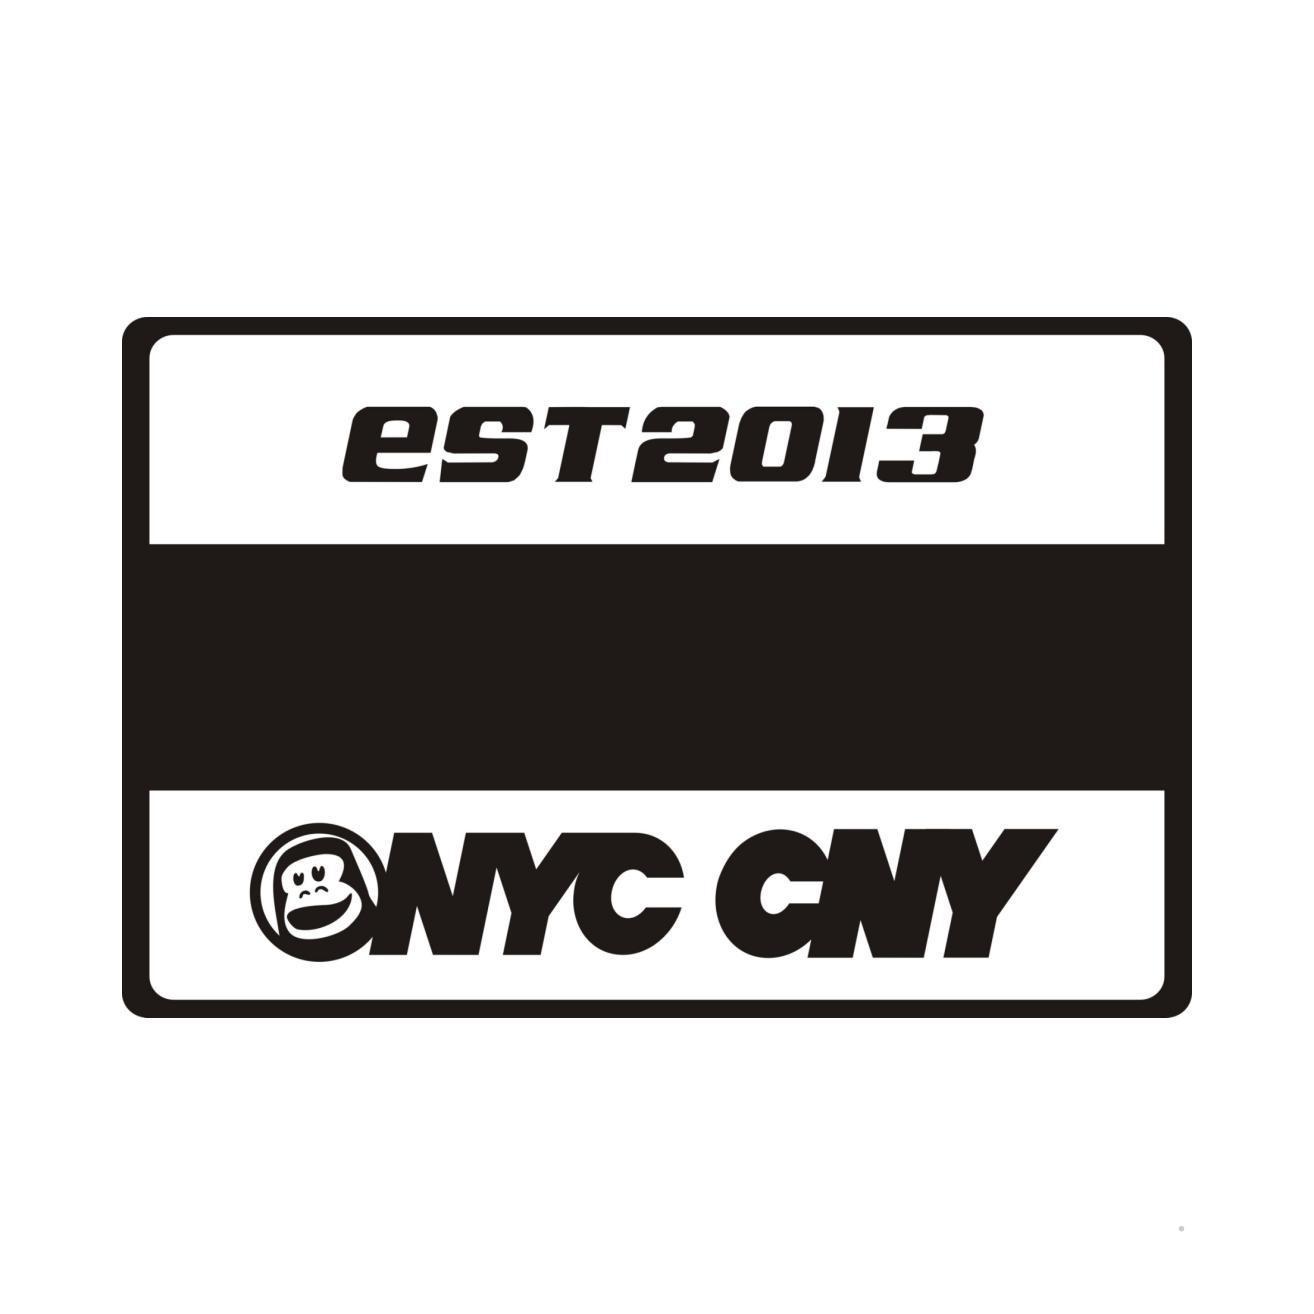 NYC CNY EST2013logo